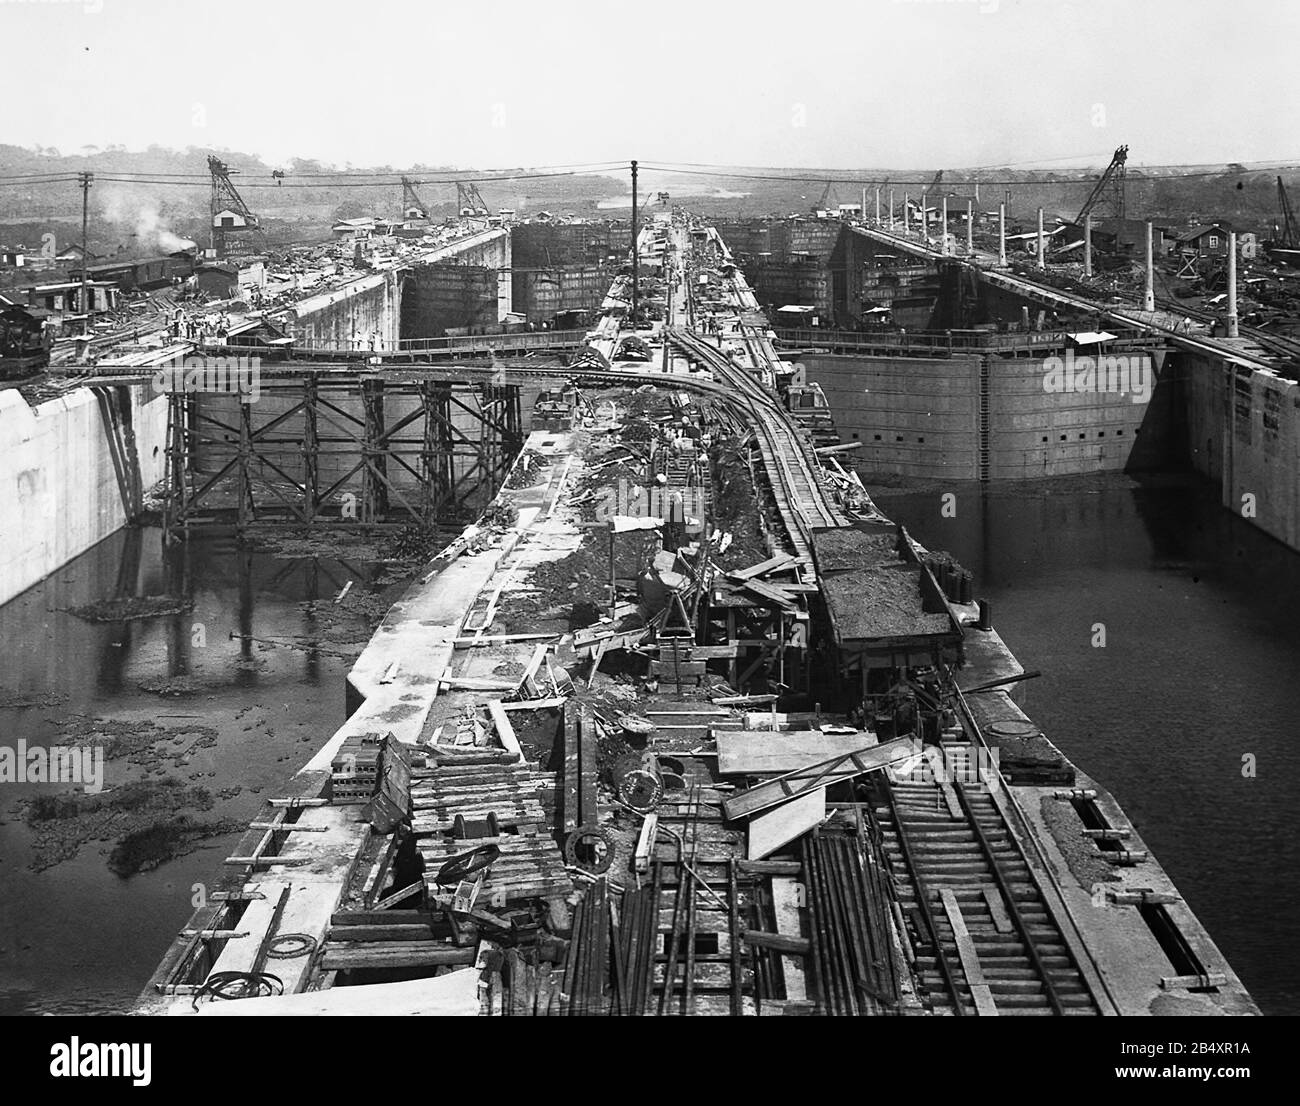 Panama Canal construction works in the beginning of 20th century - Gatun Locks, Stock Photo